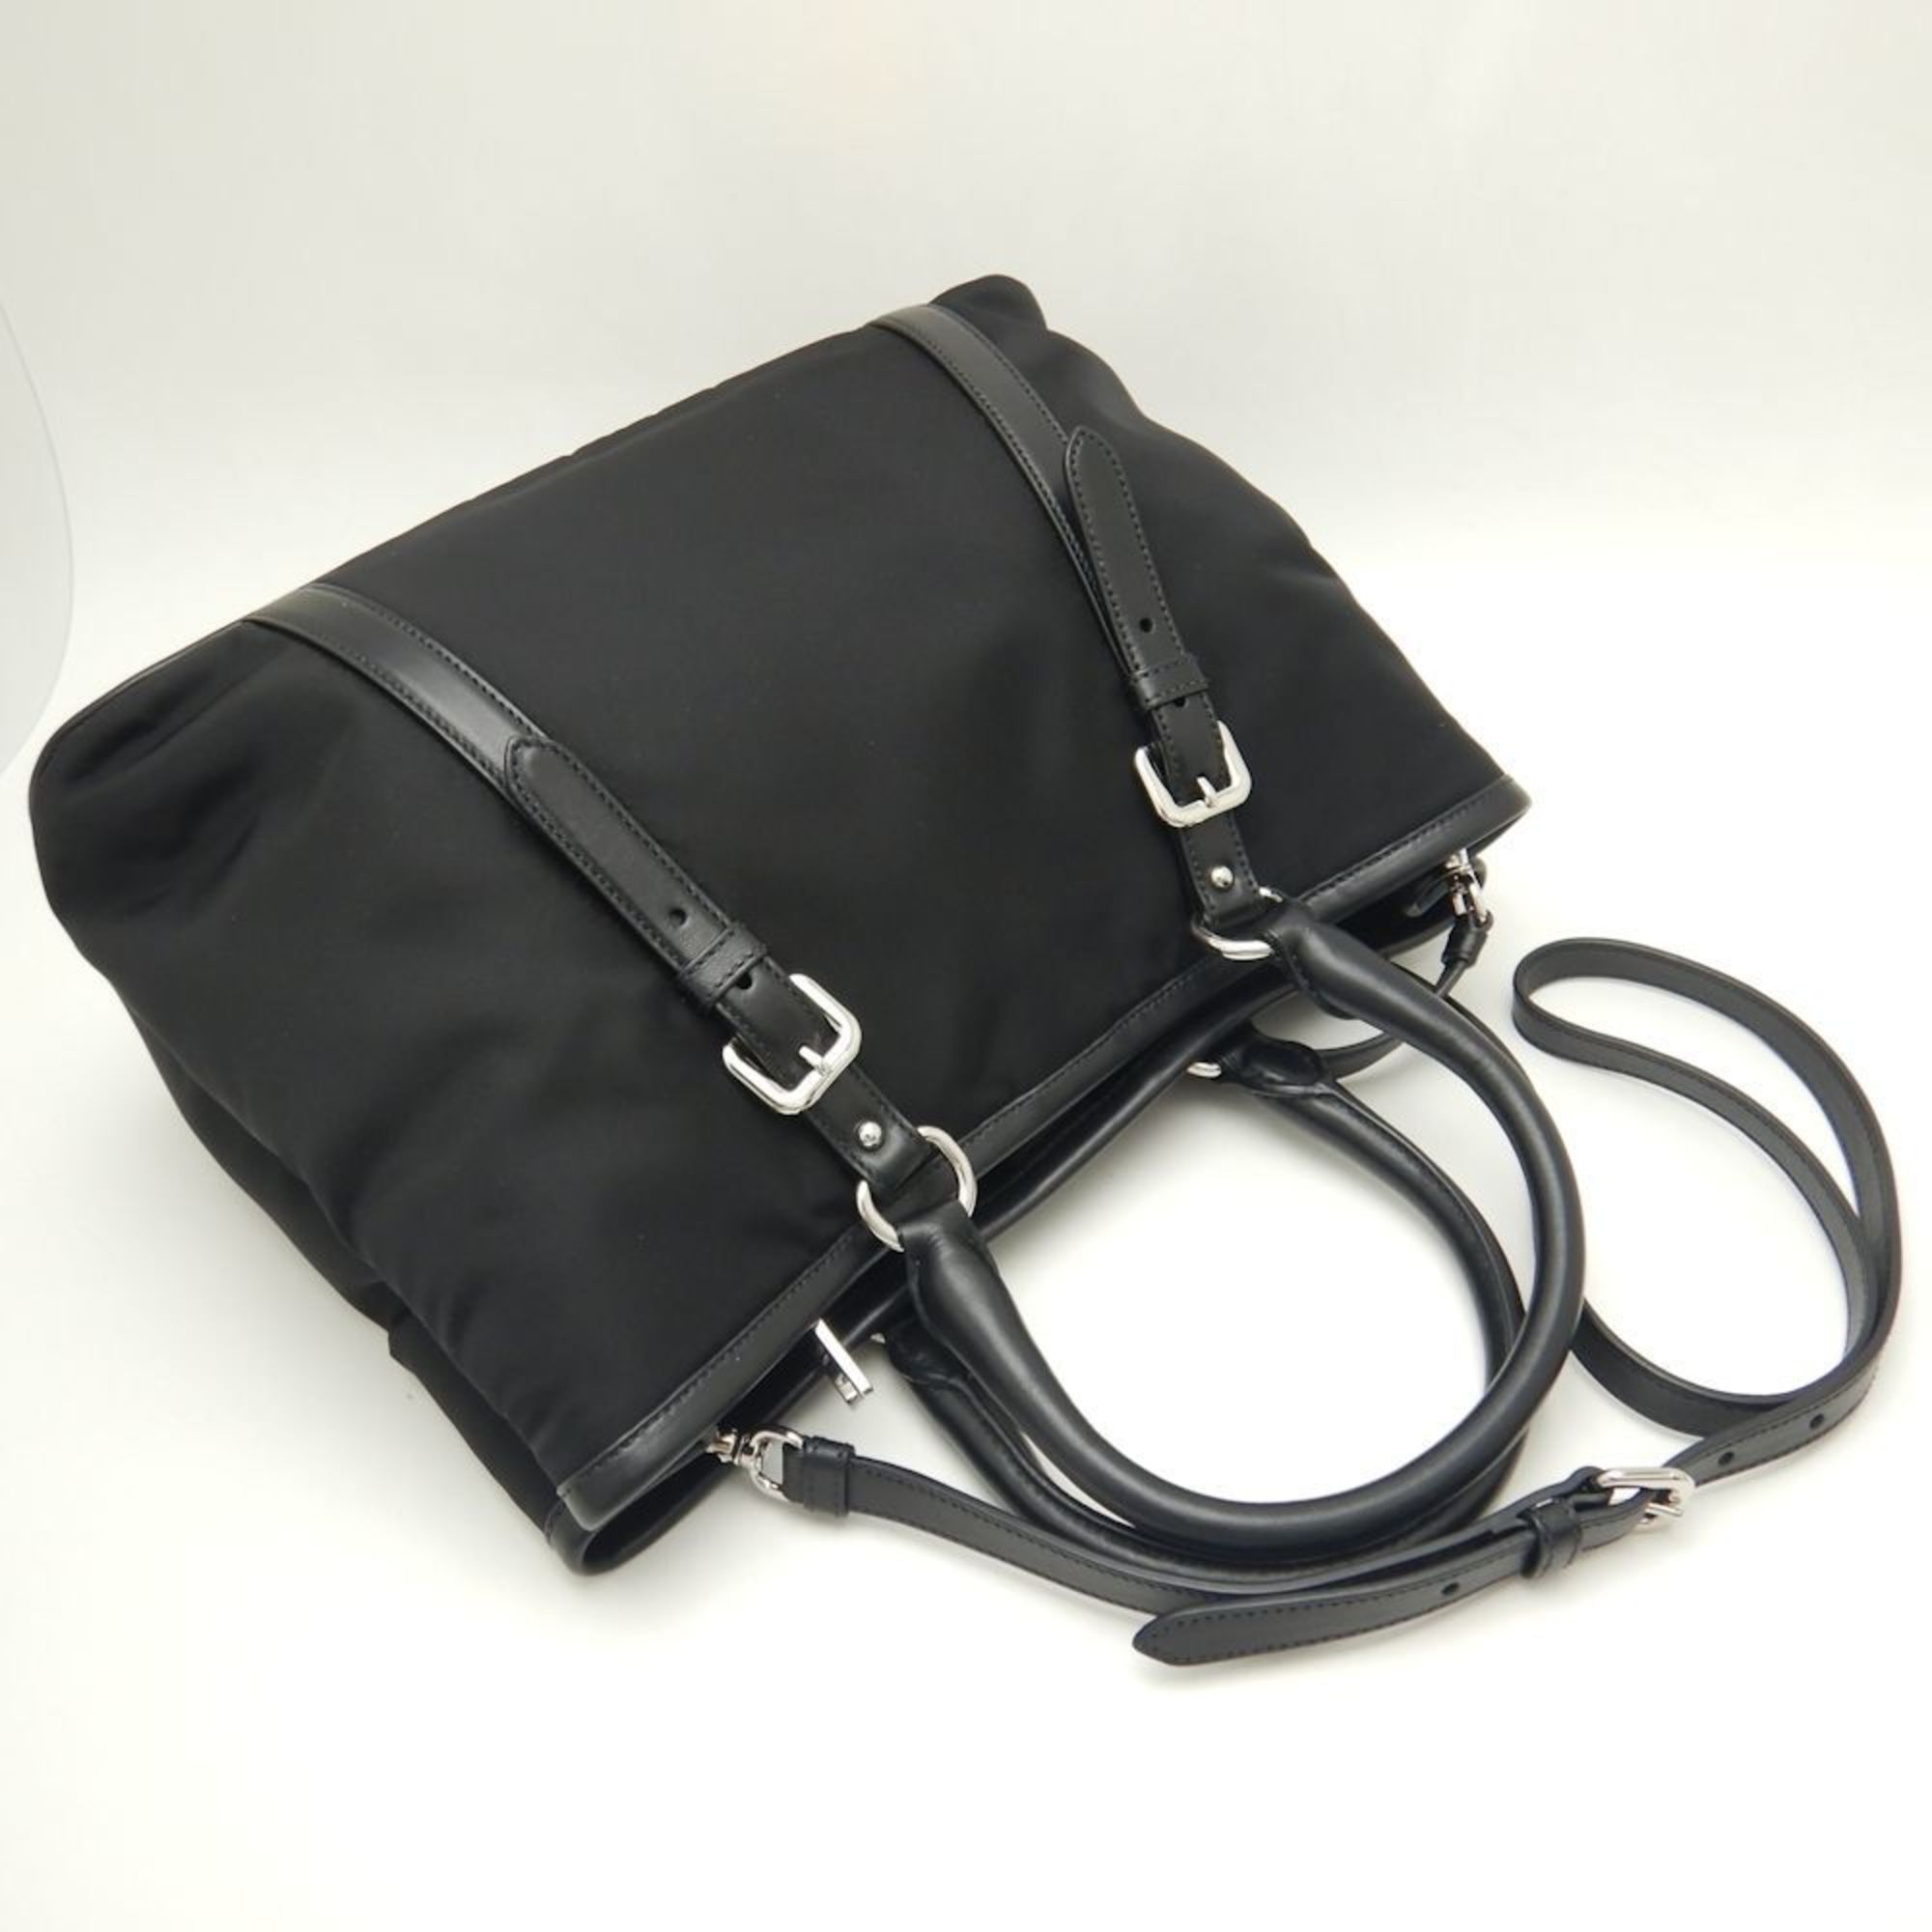 PRADA 1BA832 Tote Bag Nylon x Leather NERO 251670